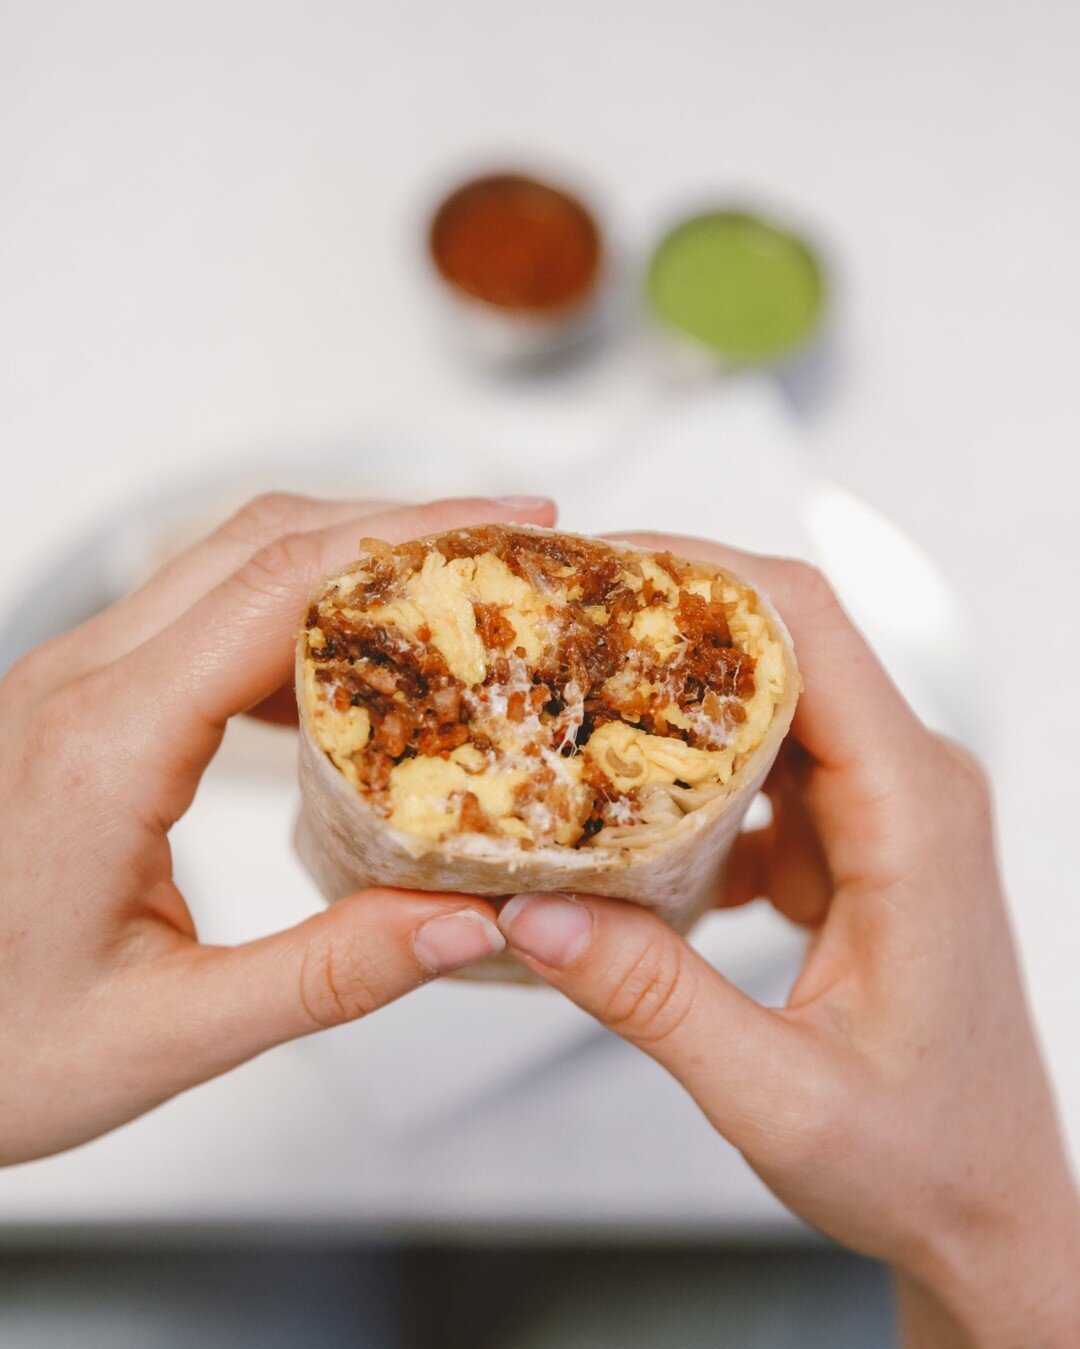 That first bite feeling.⠀⠀⠀⠀⠀⠀⠀⠀⠀
⠀⠀⠀⠀⠀⠀⠀⠀⠀
⠀⠀⠀⠀⠀⠀⠀⠀⠀
#alfalfa #breakfastburrito #burrito #sauce